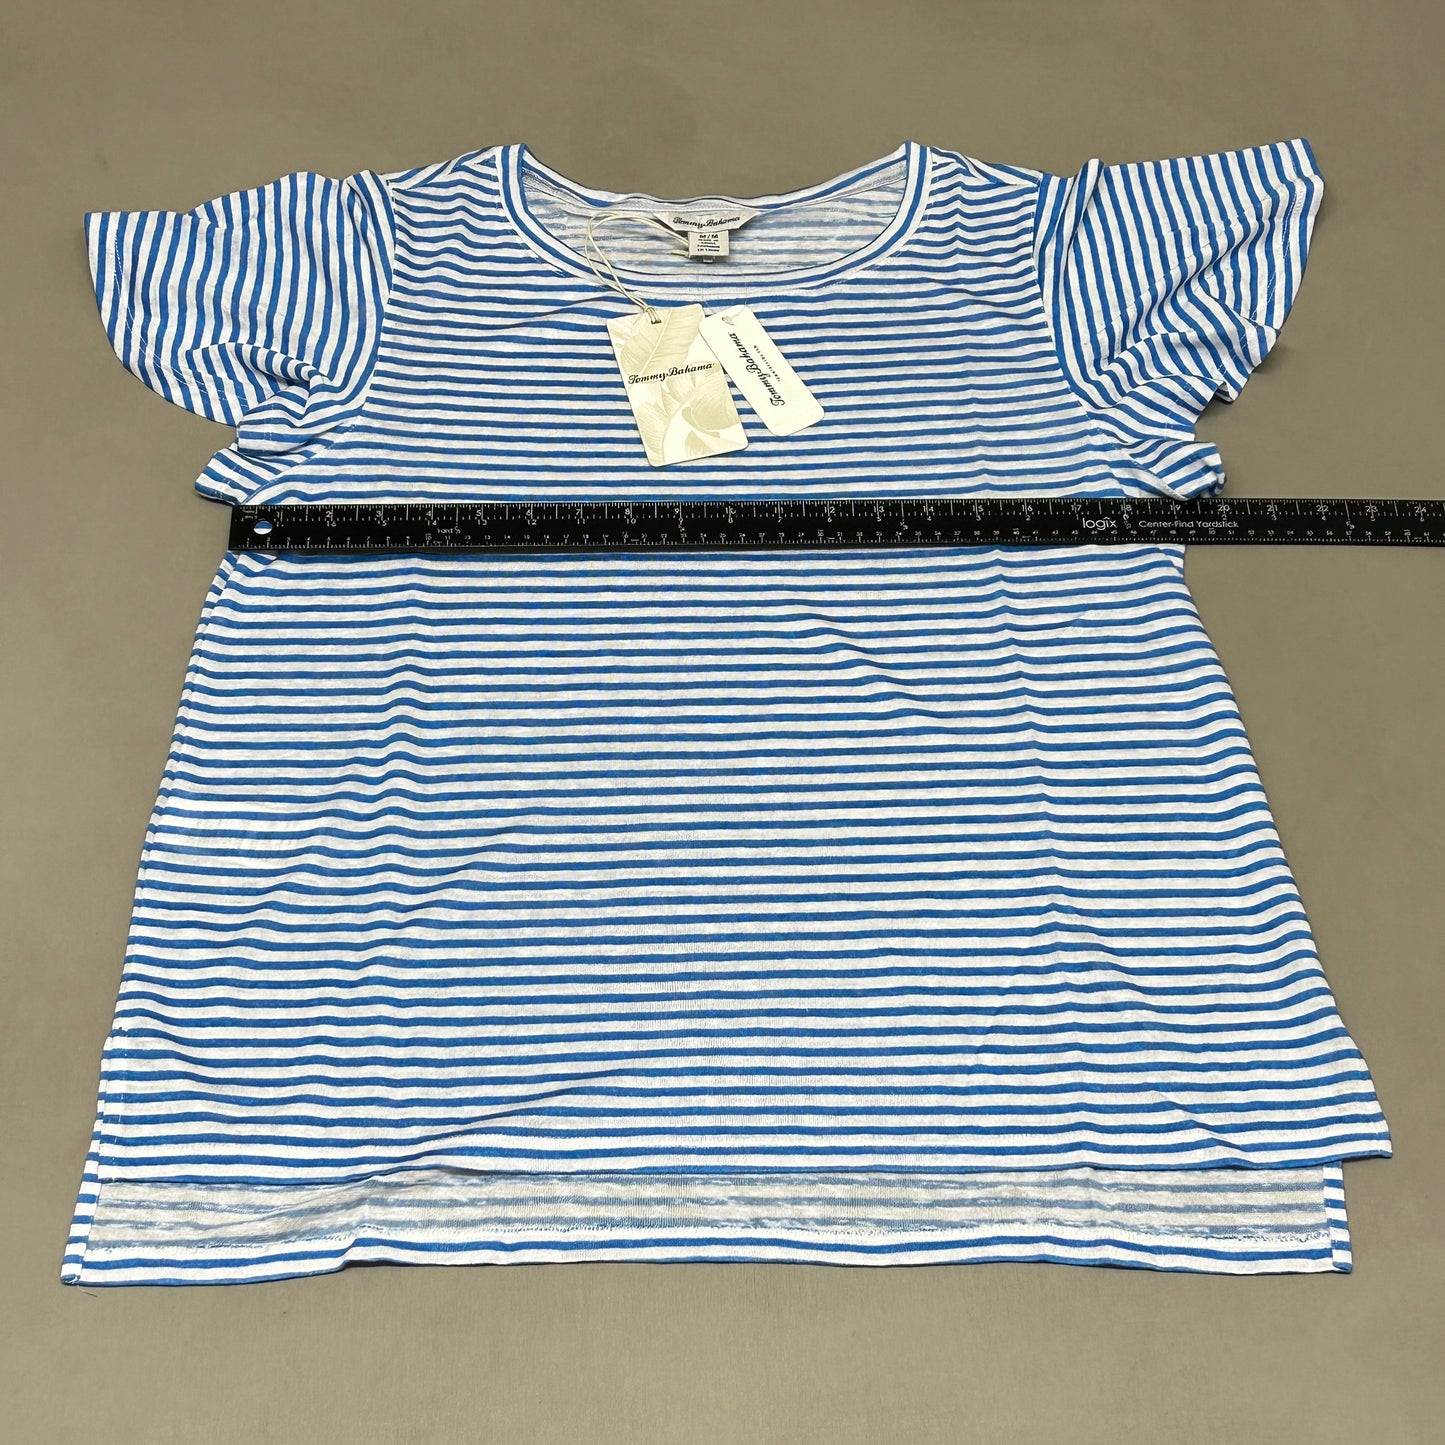 TOMMY BAHAMA Women's Bungalow Stripe Lana Top Short Sleeve Blue/White Size M (New)